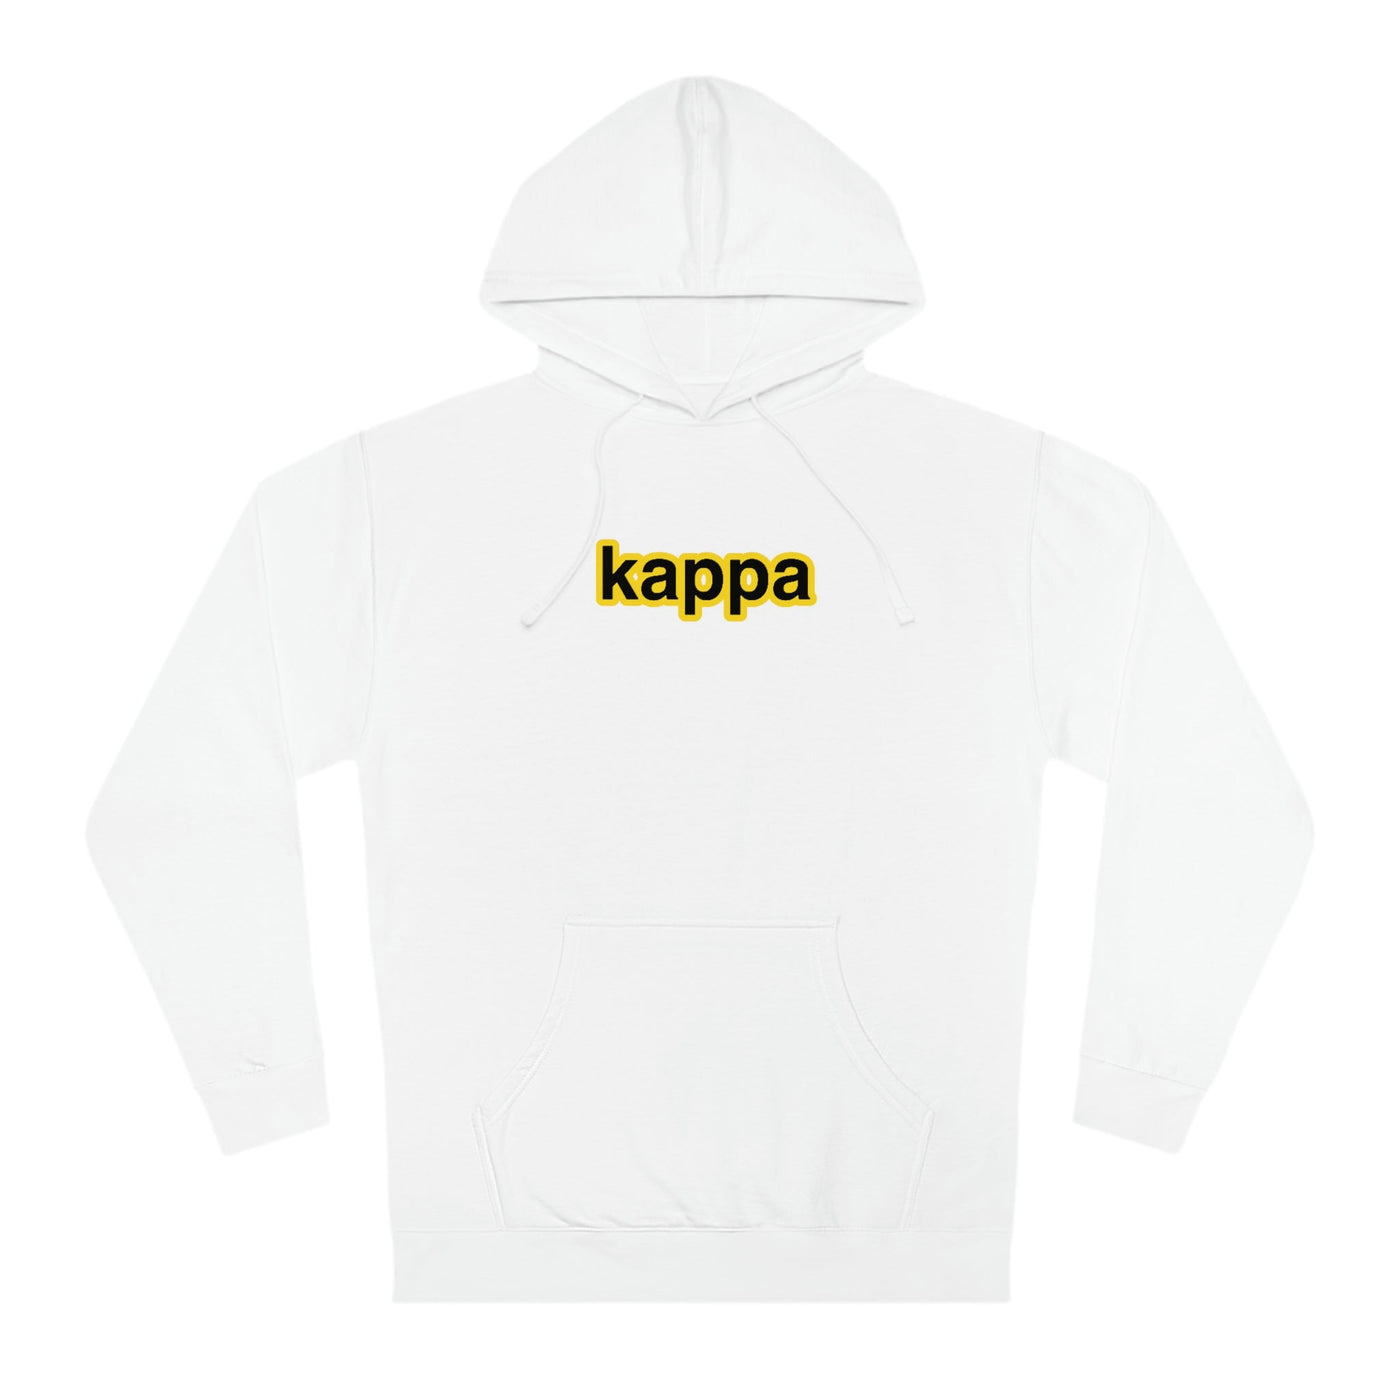 Kappa Kappa Gamma Smiley Drew Sweatshirt | KKG Smiley Sorority Hoodie